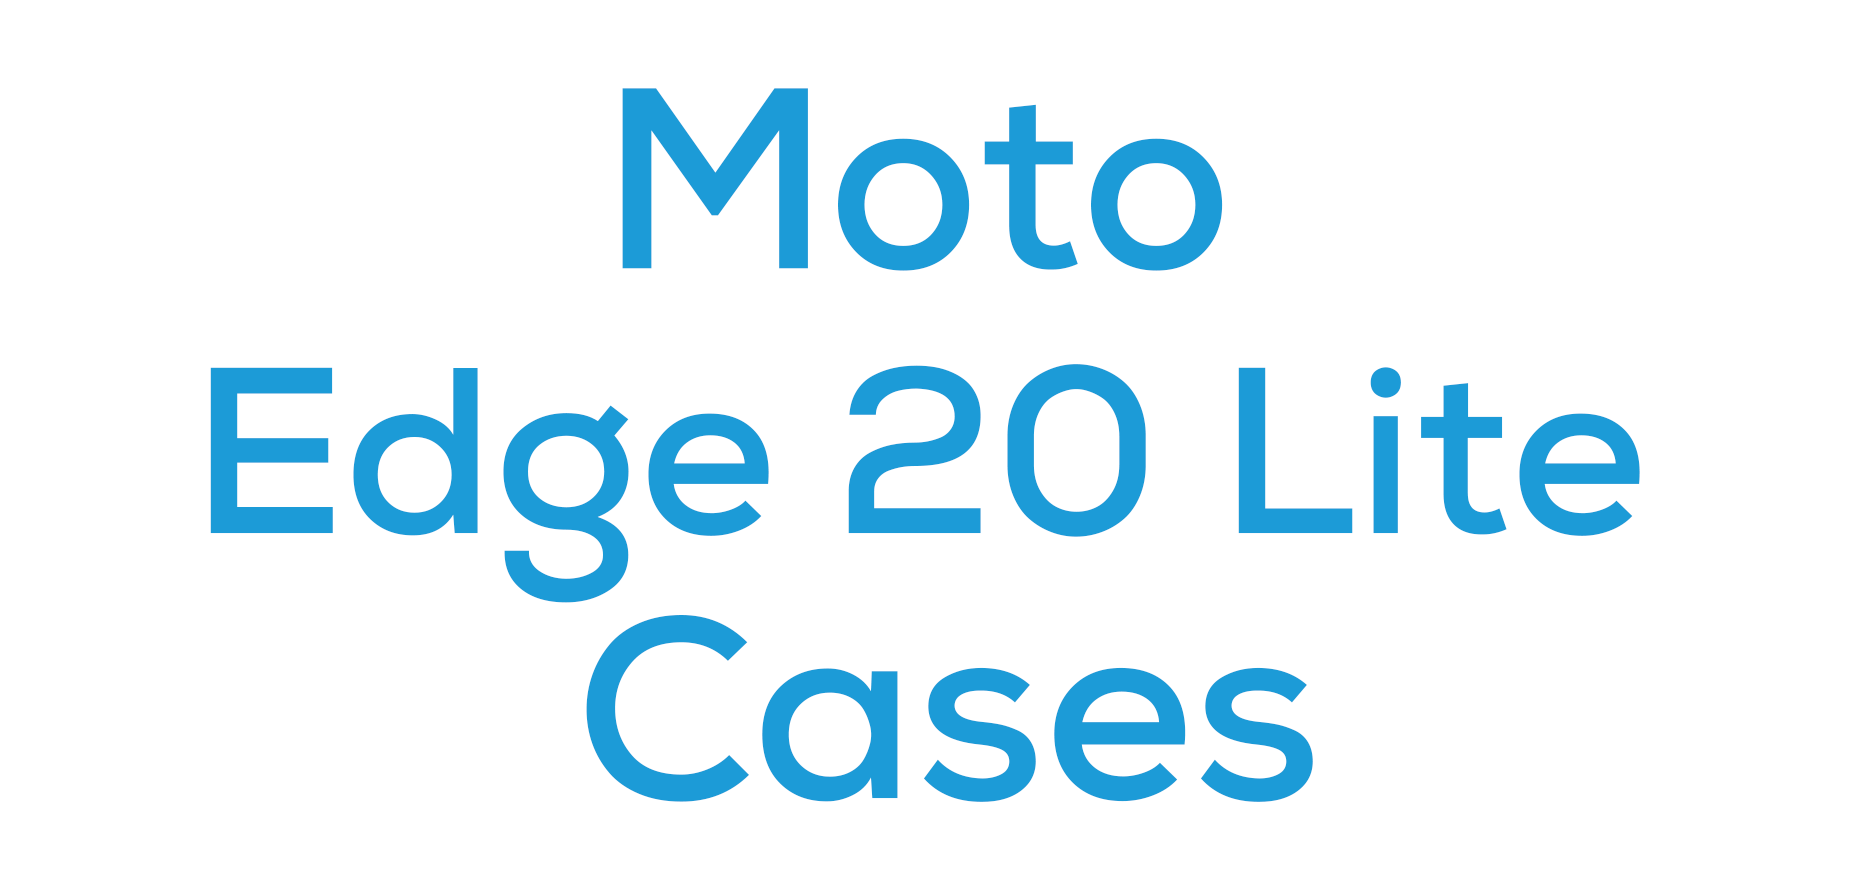 Moto Edge 20 Lite Cases